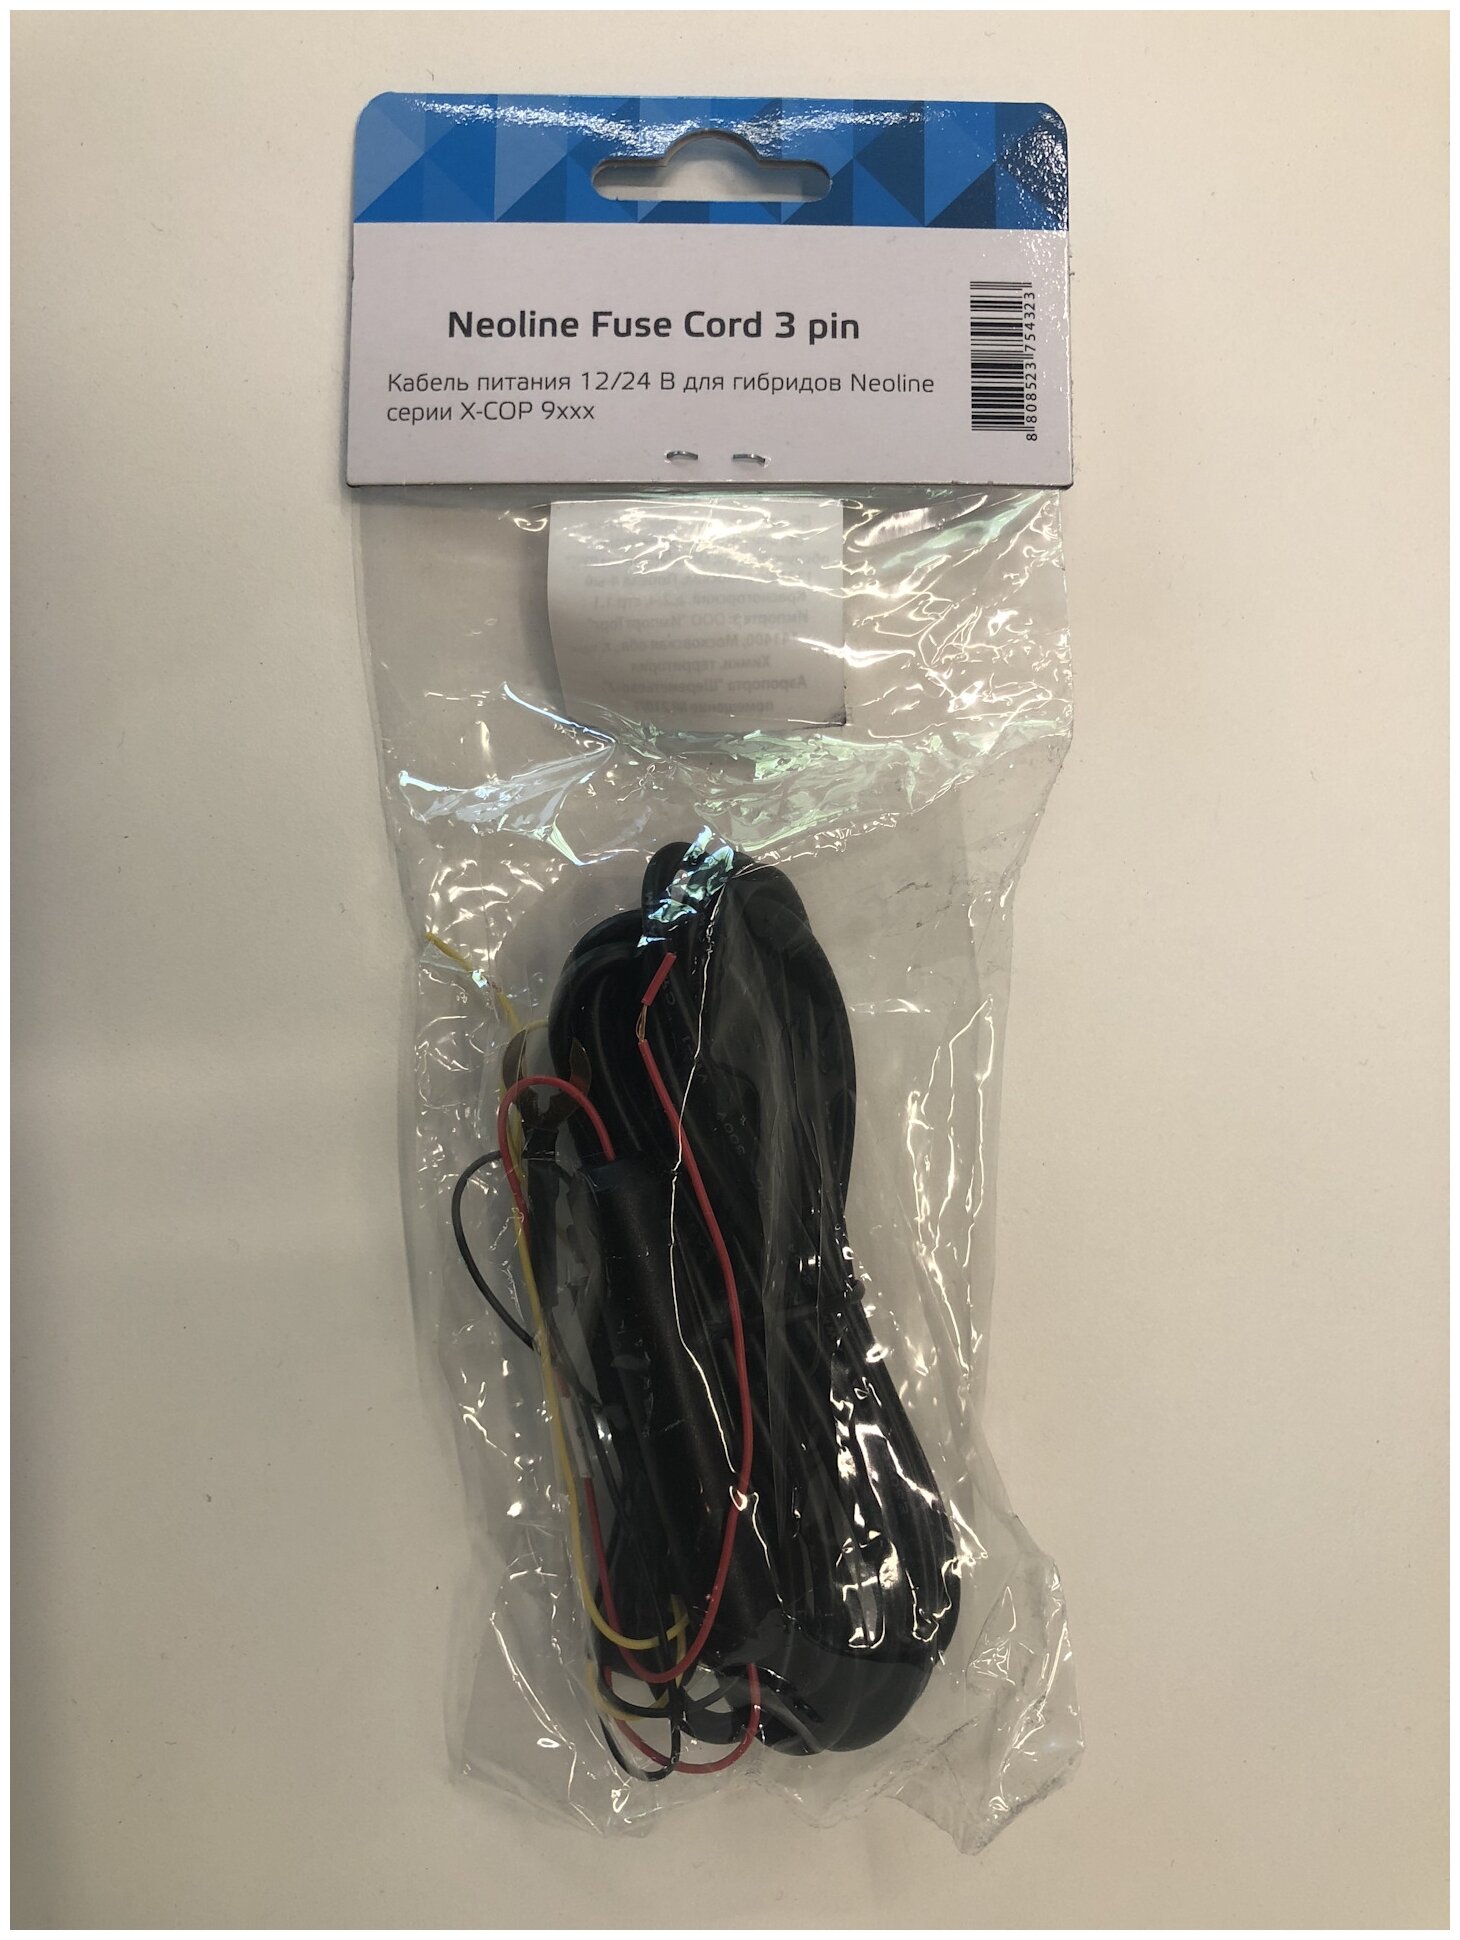 Кабель для прямого подключения Neoline Fuse Cord 3 pin для X-Cop 9xxx - фото №4